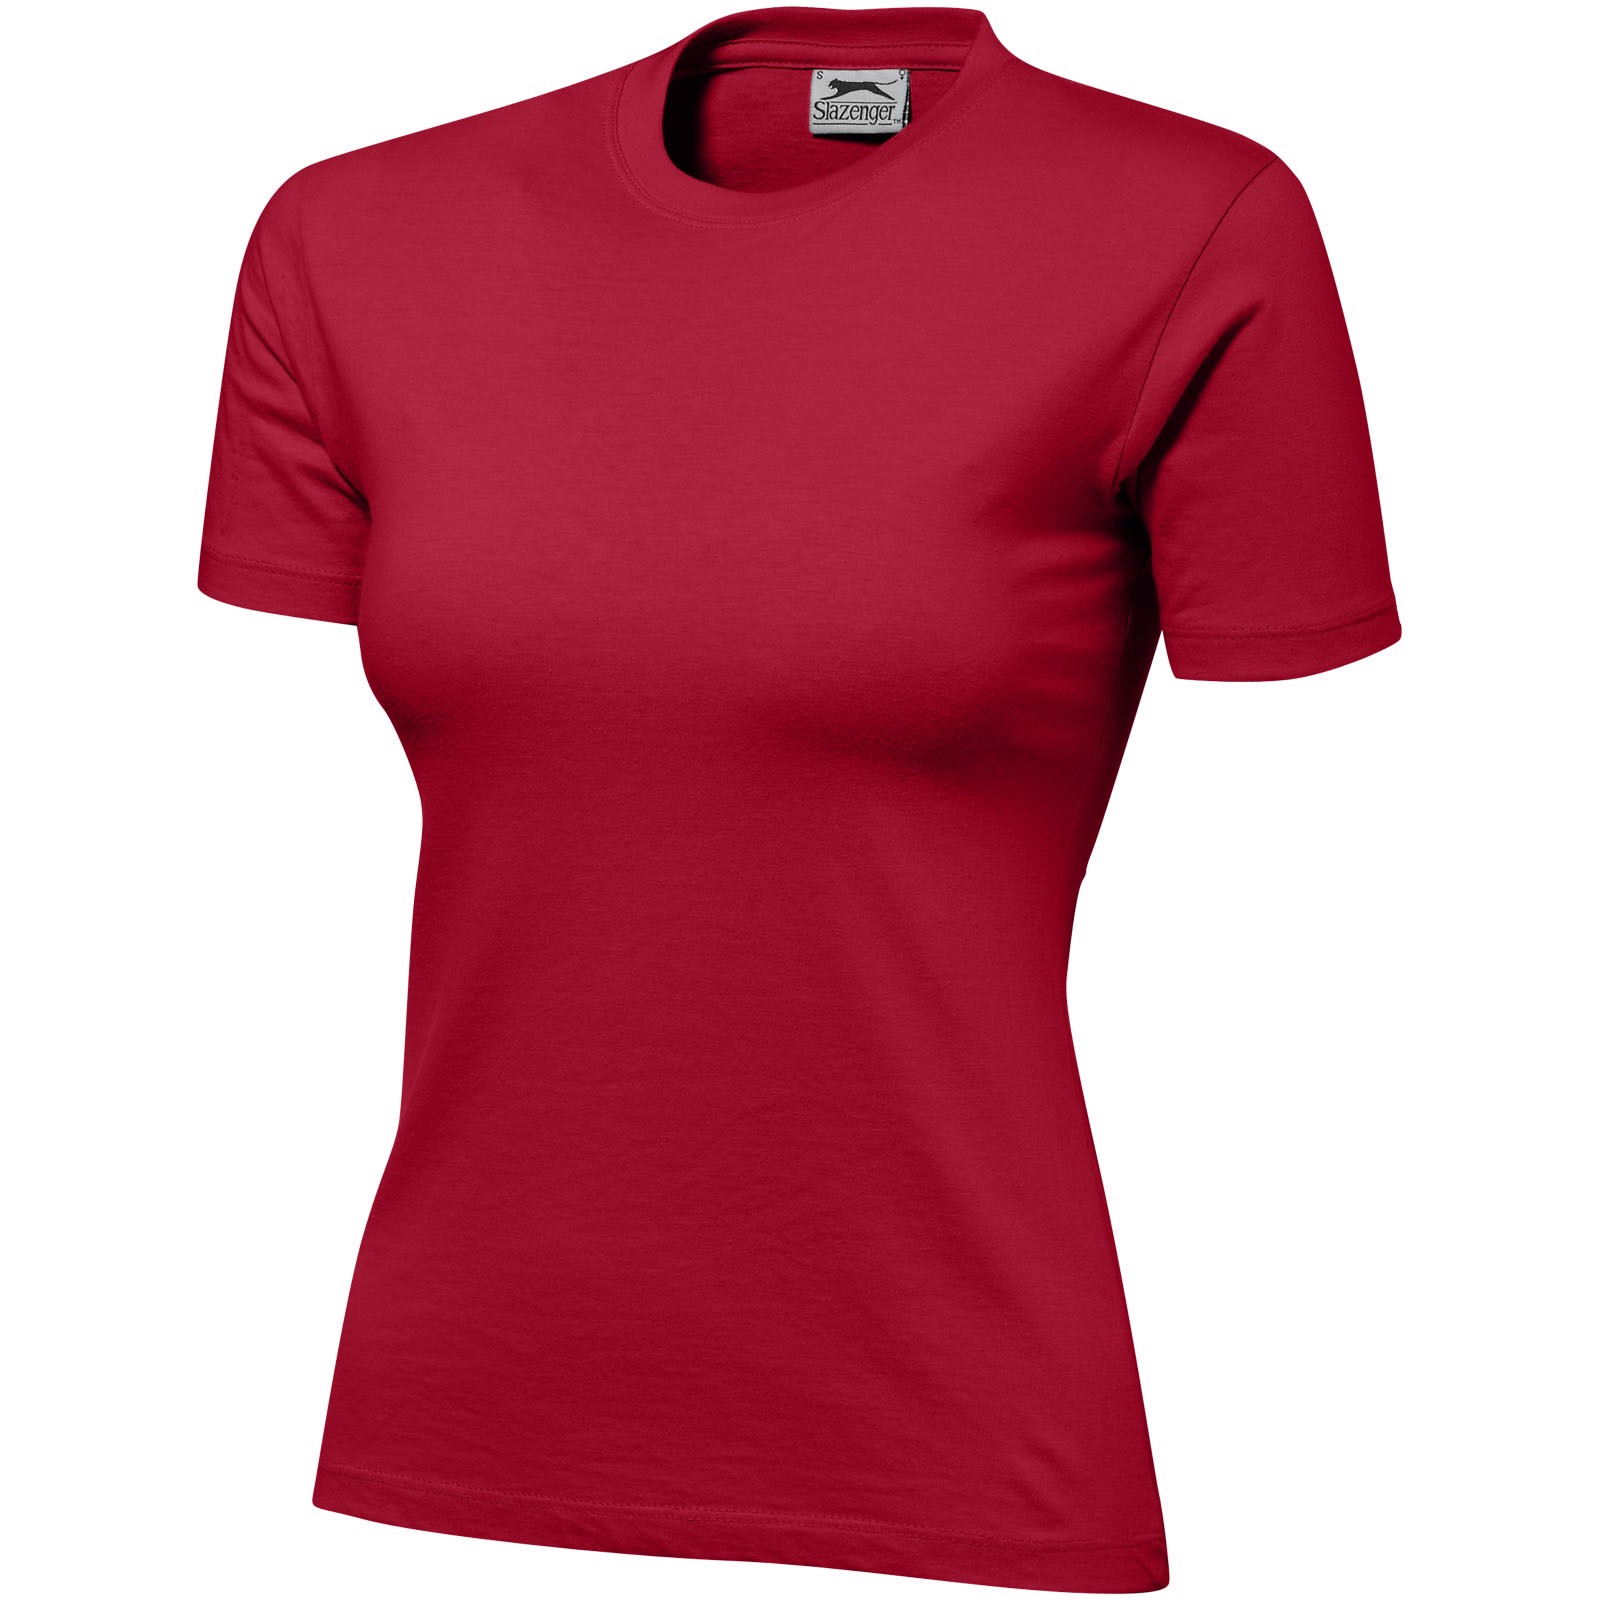 Camiseta de manga corta para mujer "Ace" - Rojo Oscuro / M